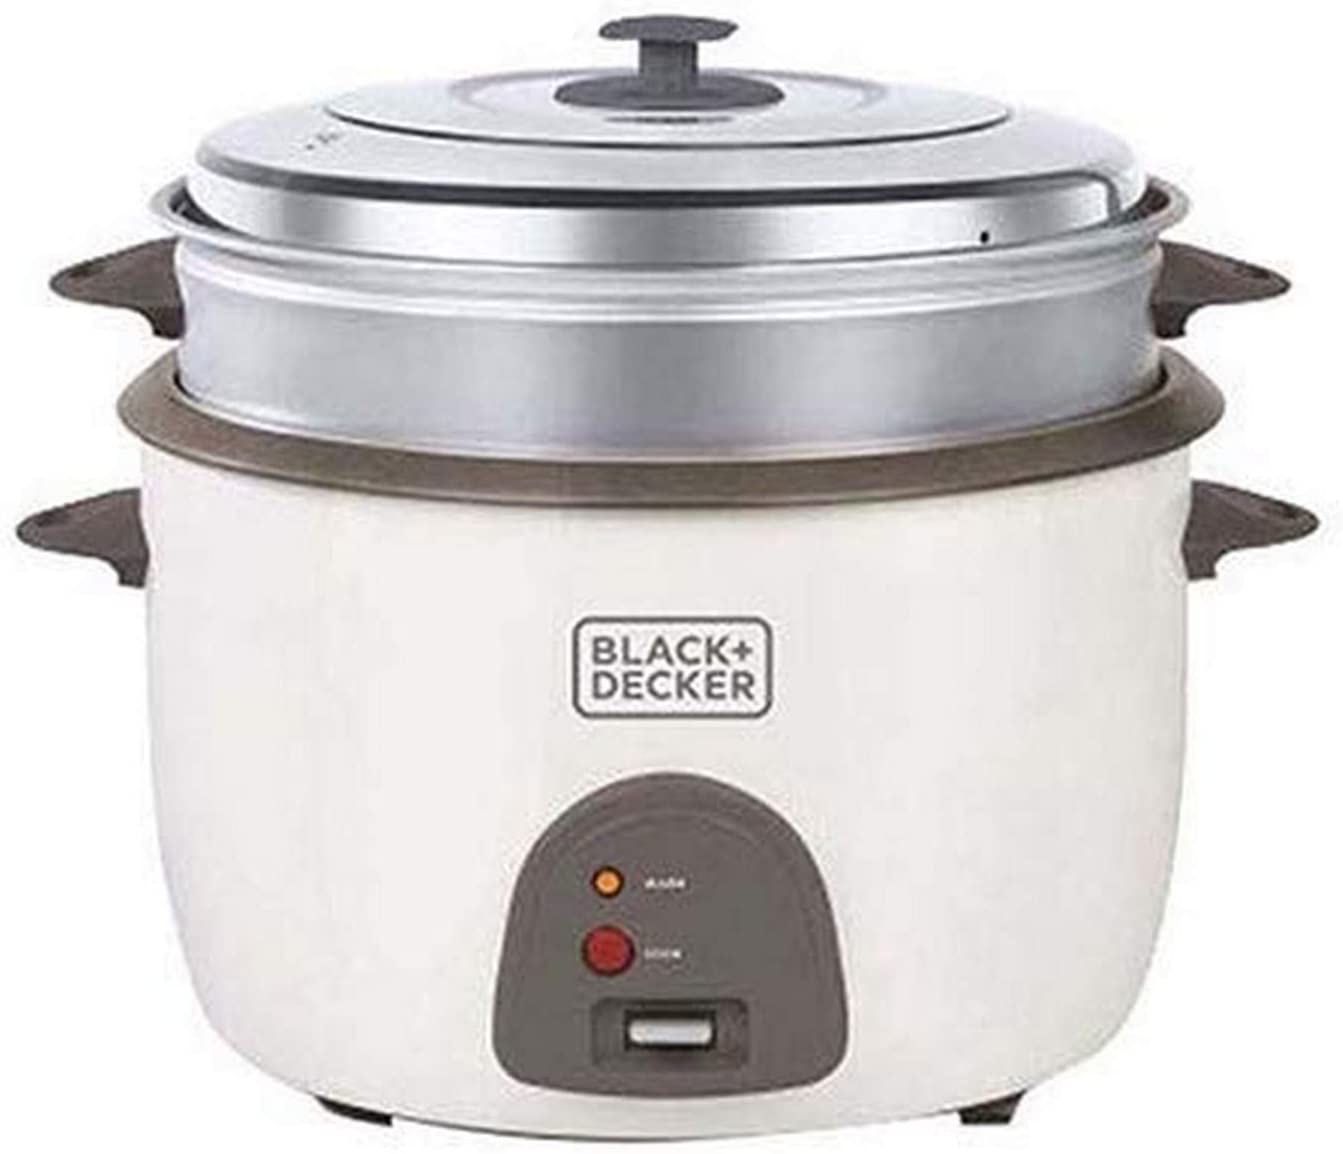 Black + Decker Rice Cooker  Black decker rice cooker, Steamer recipes,  Cooker